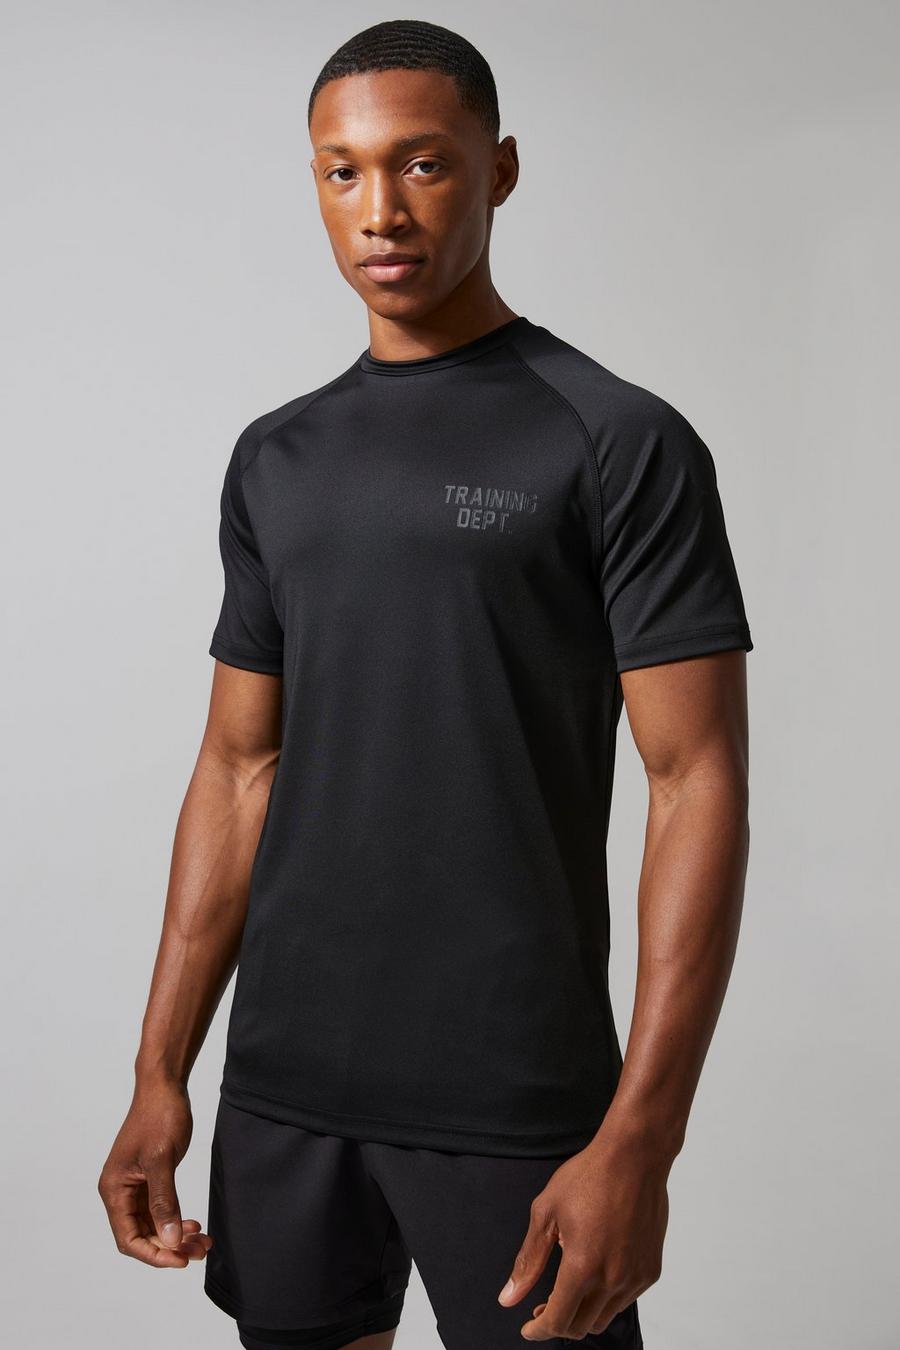 Camiseta MAN Active Training Dept ajustada al músculo, Black